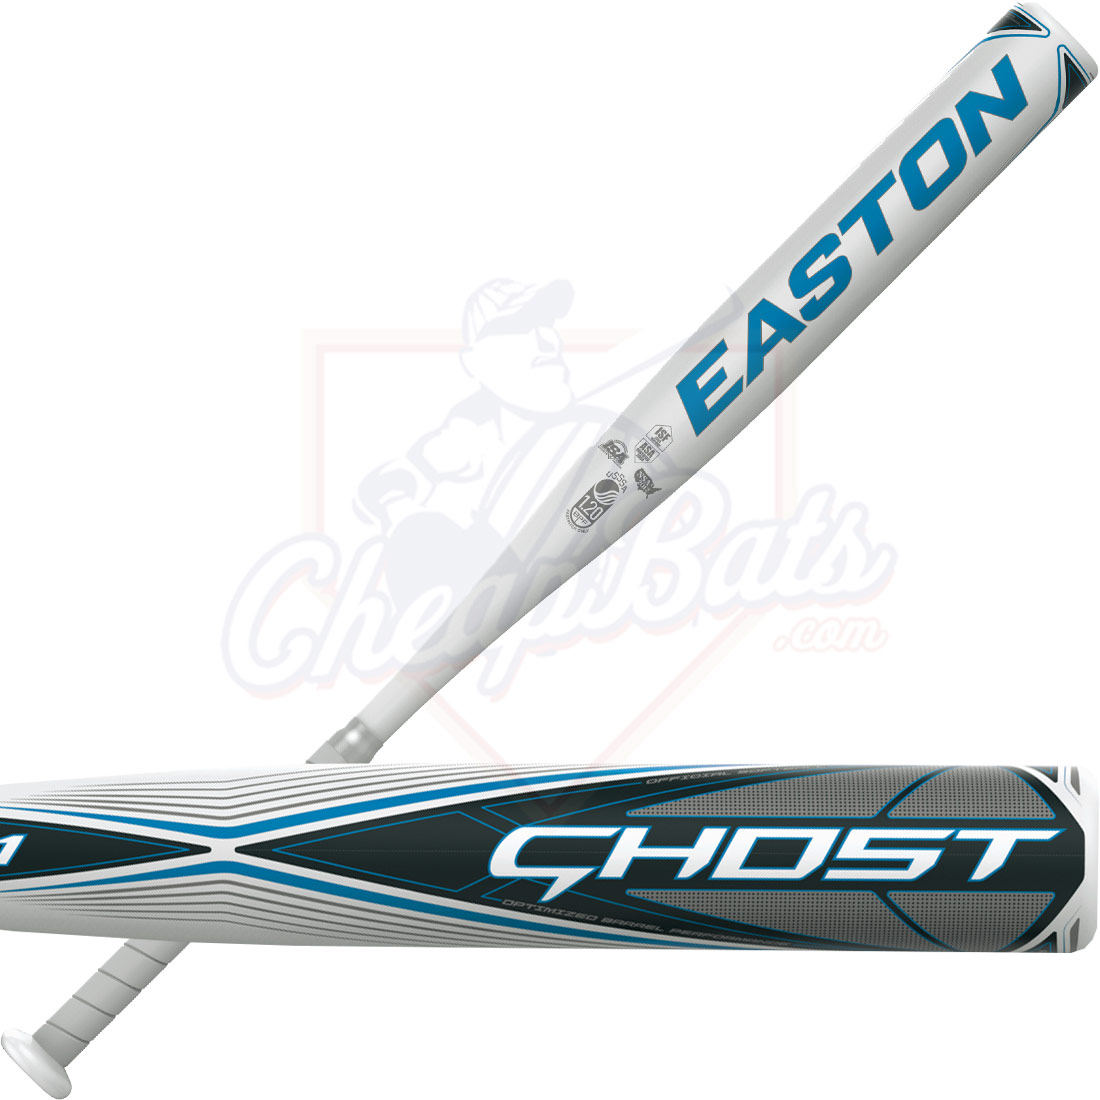 FP20GHY11 -11 Easton Ghost Youth Girls Fastpitch Softball Bat 